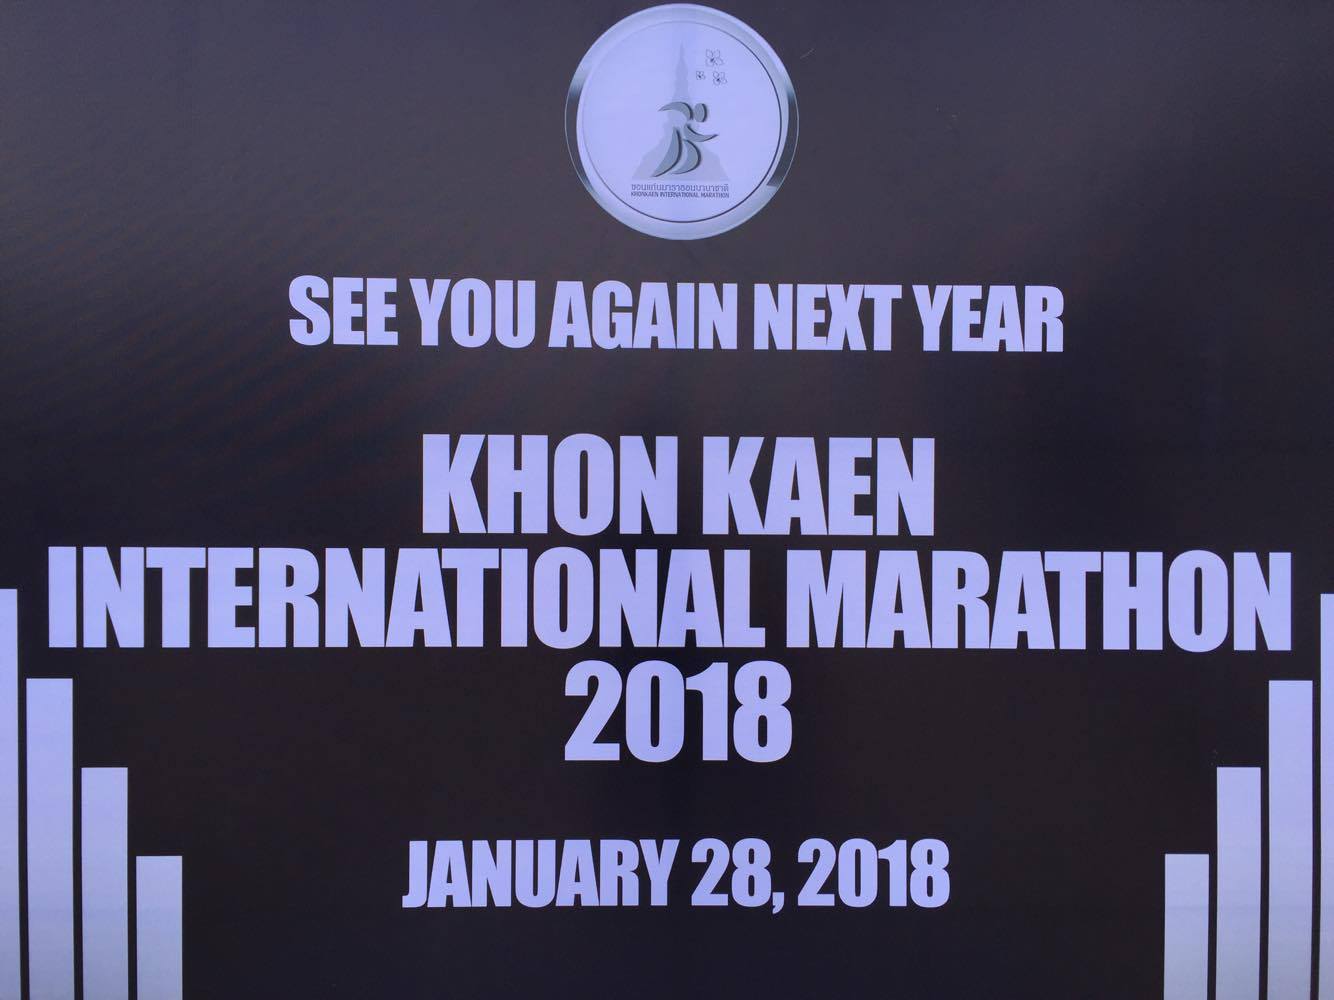 Khon Kaen International Marathon 2018